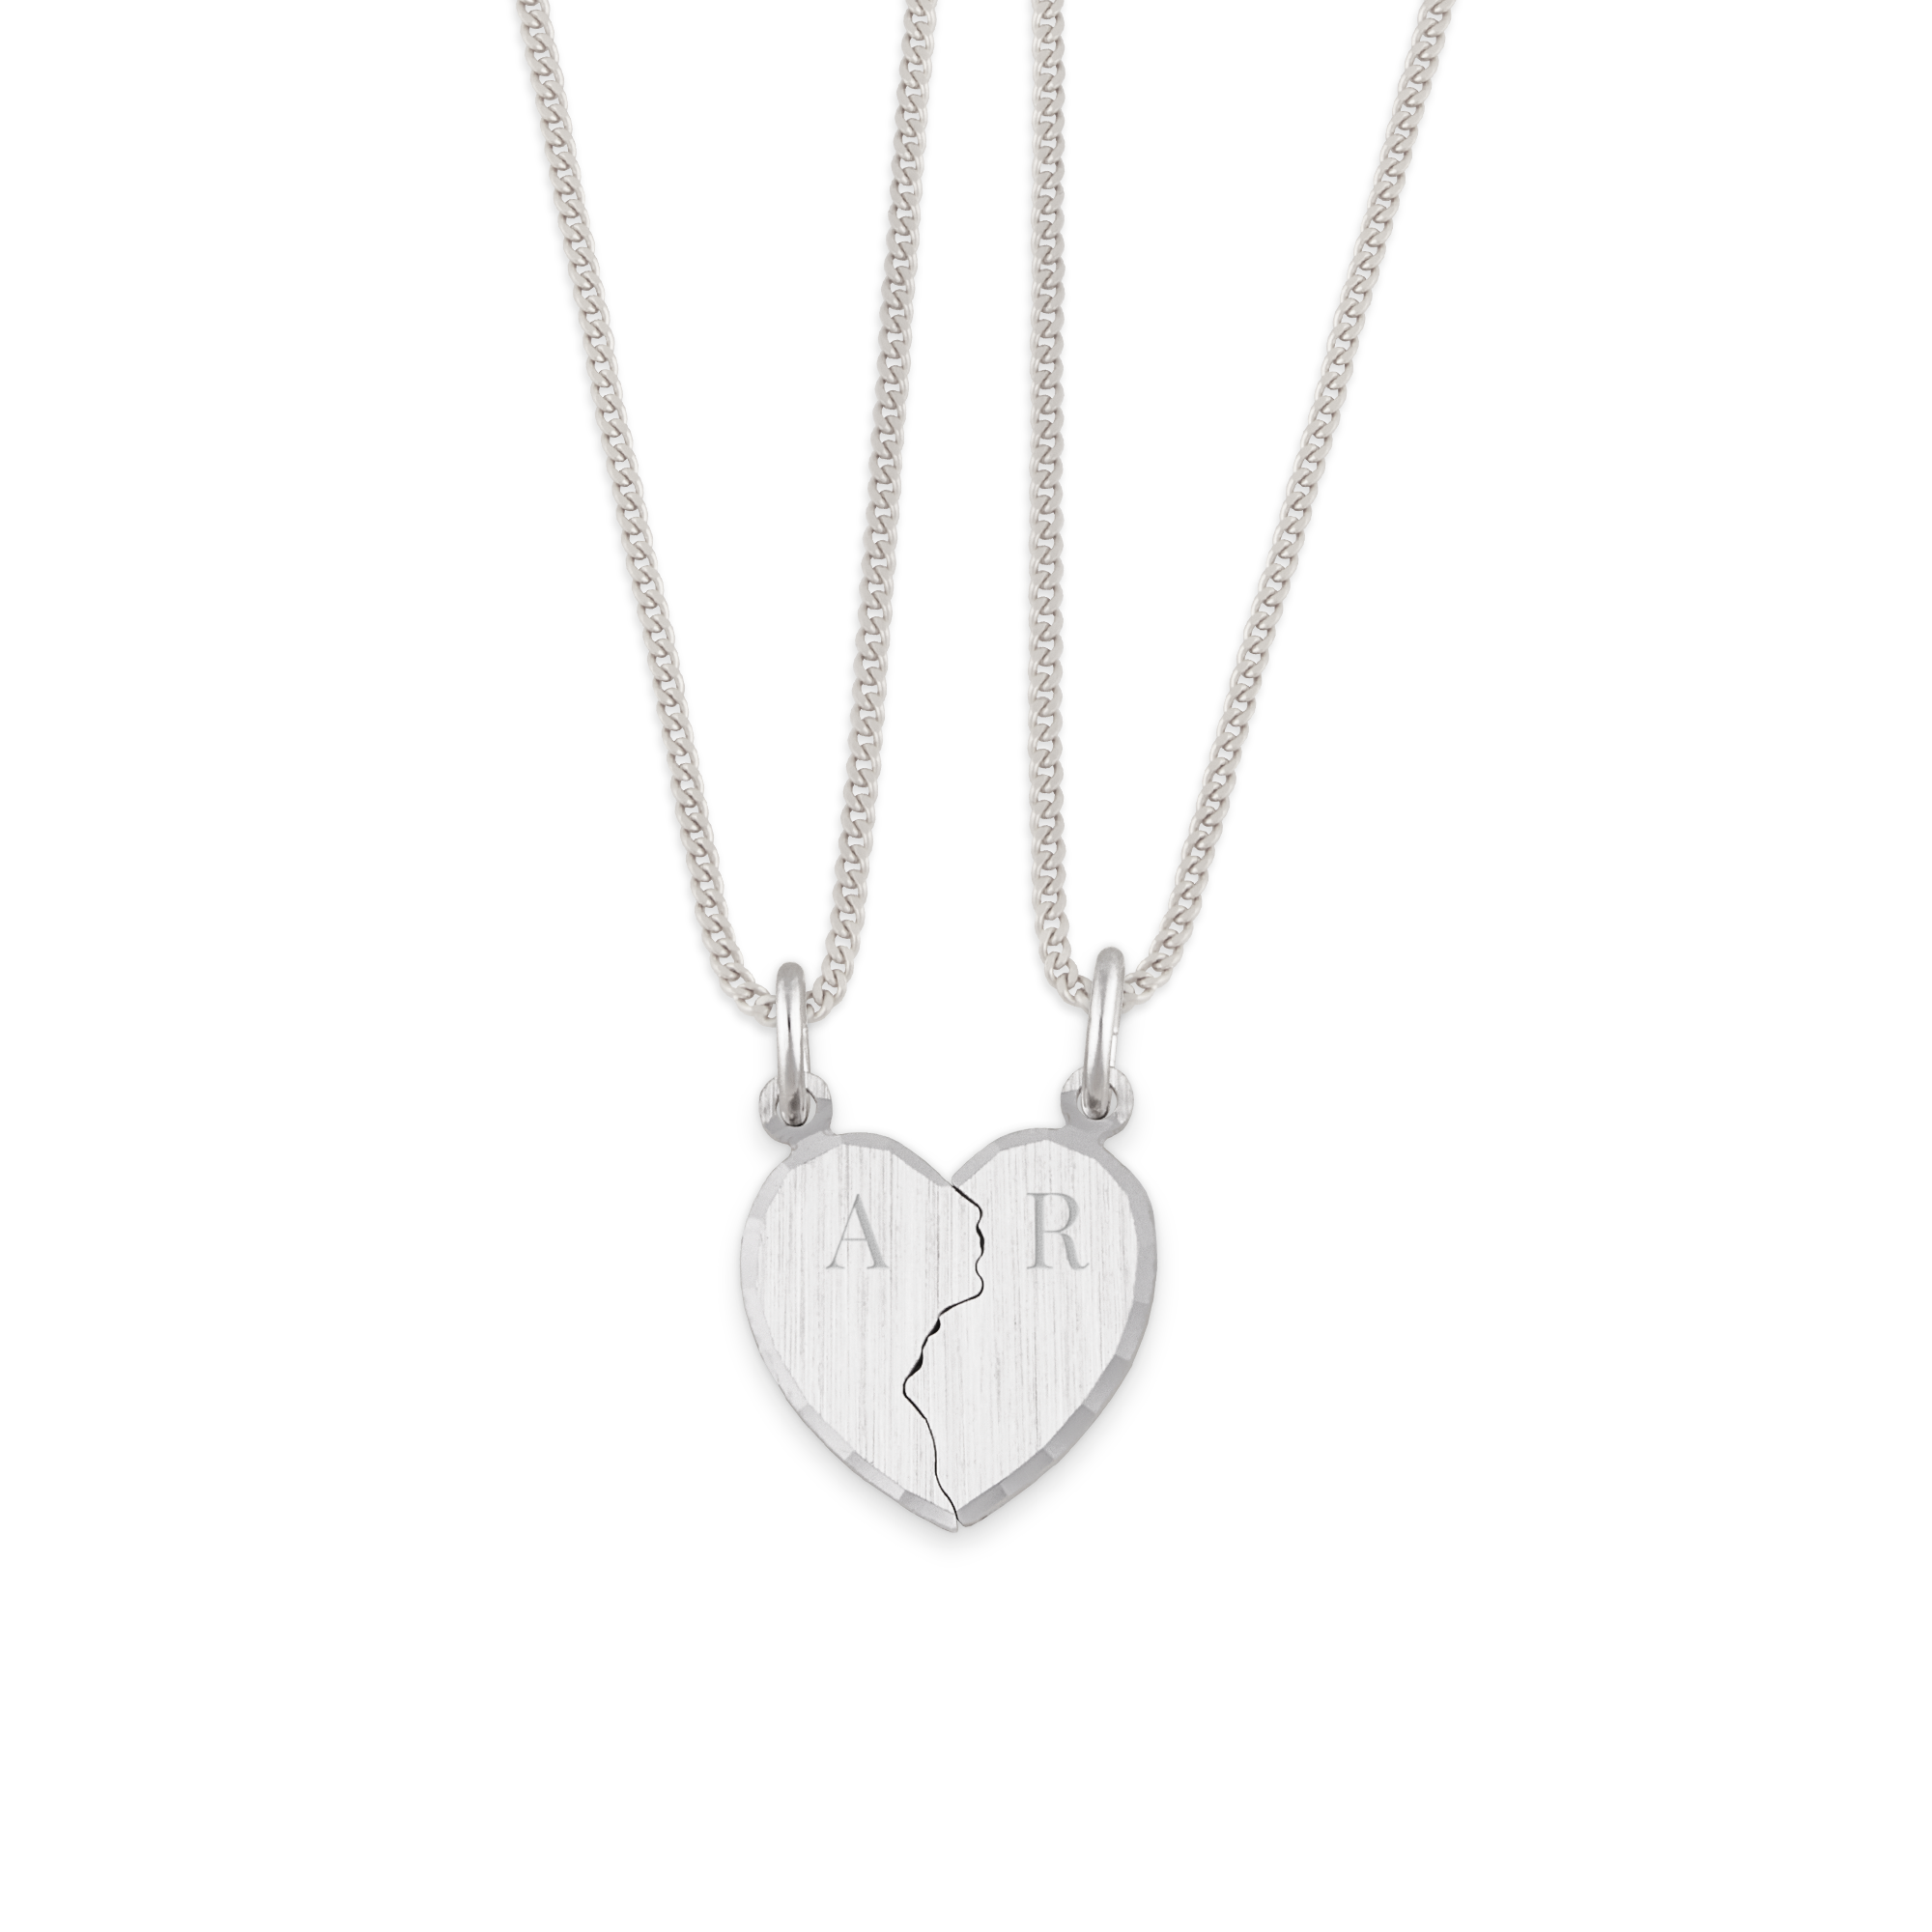 Real silver broken heart necklace